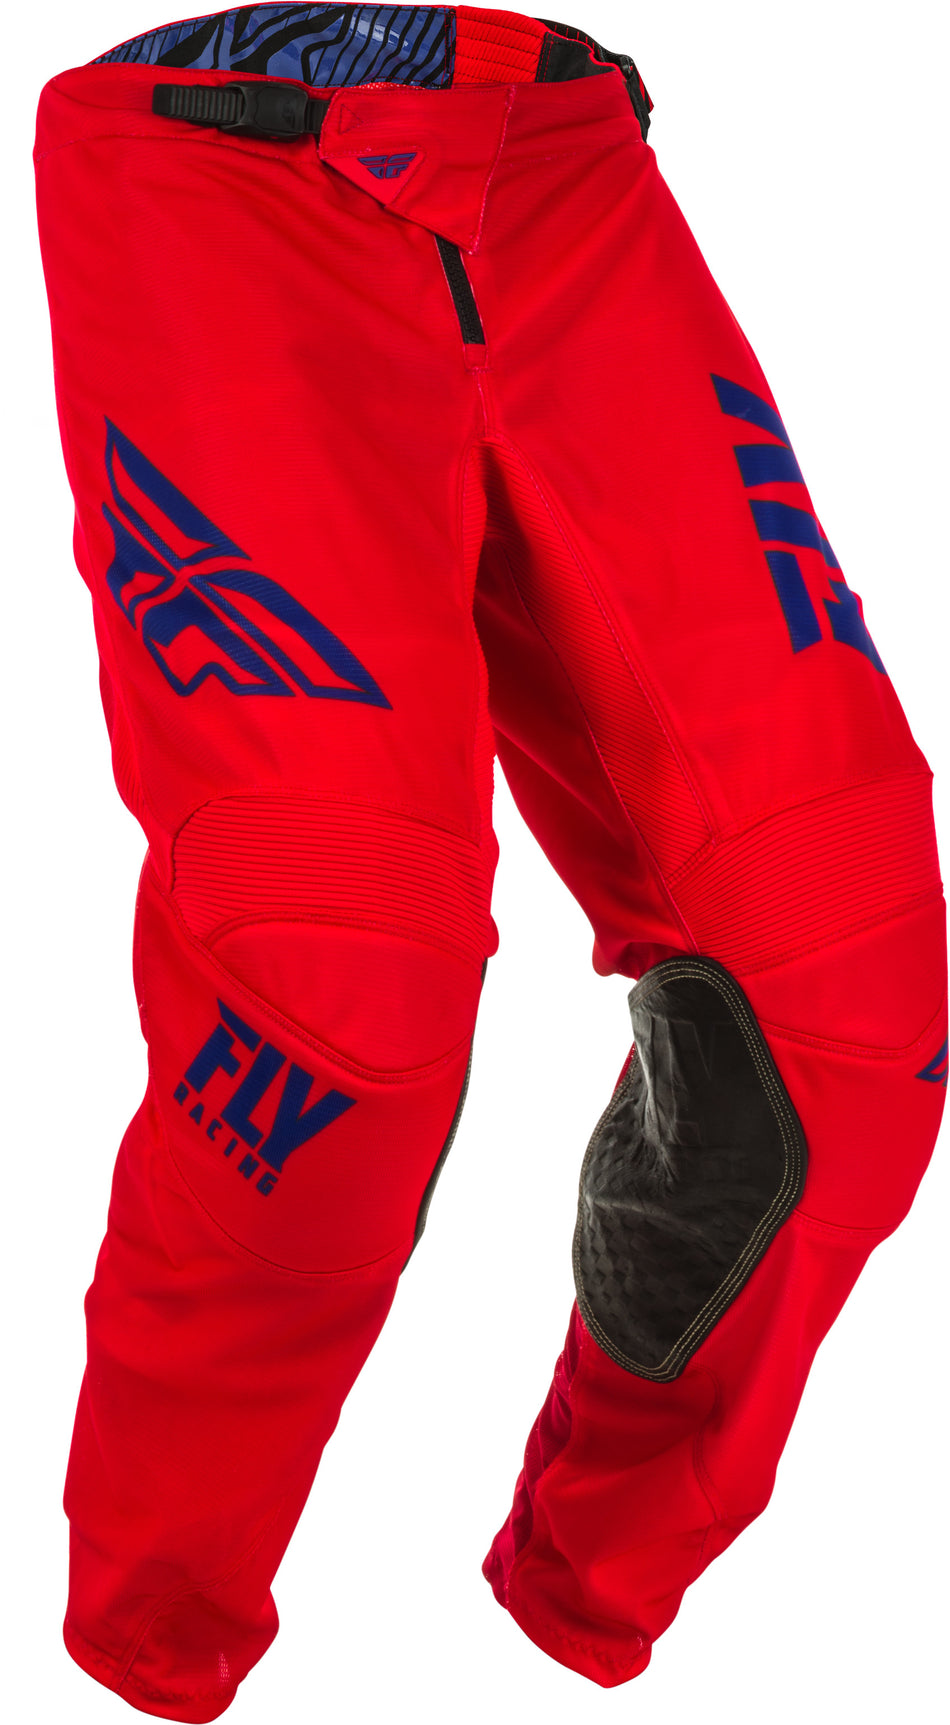 FLY RACING Kinetic Mesh Shield Pants Red/Blue Sz 28s 373-32228S